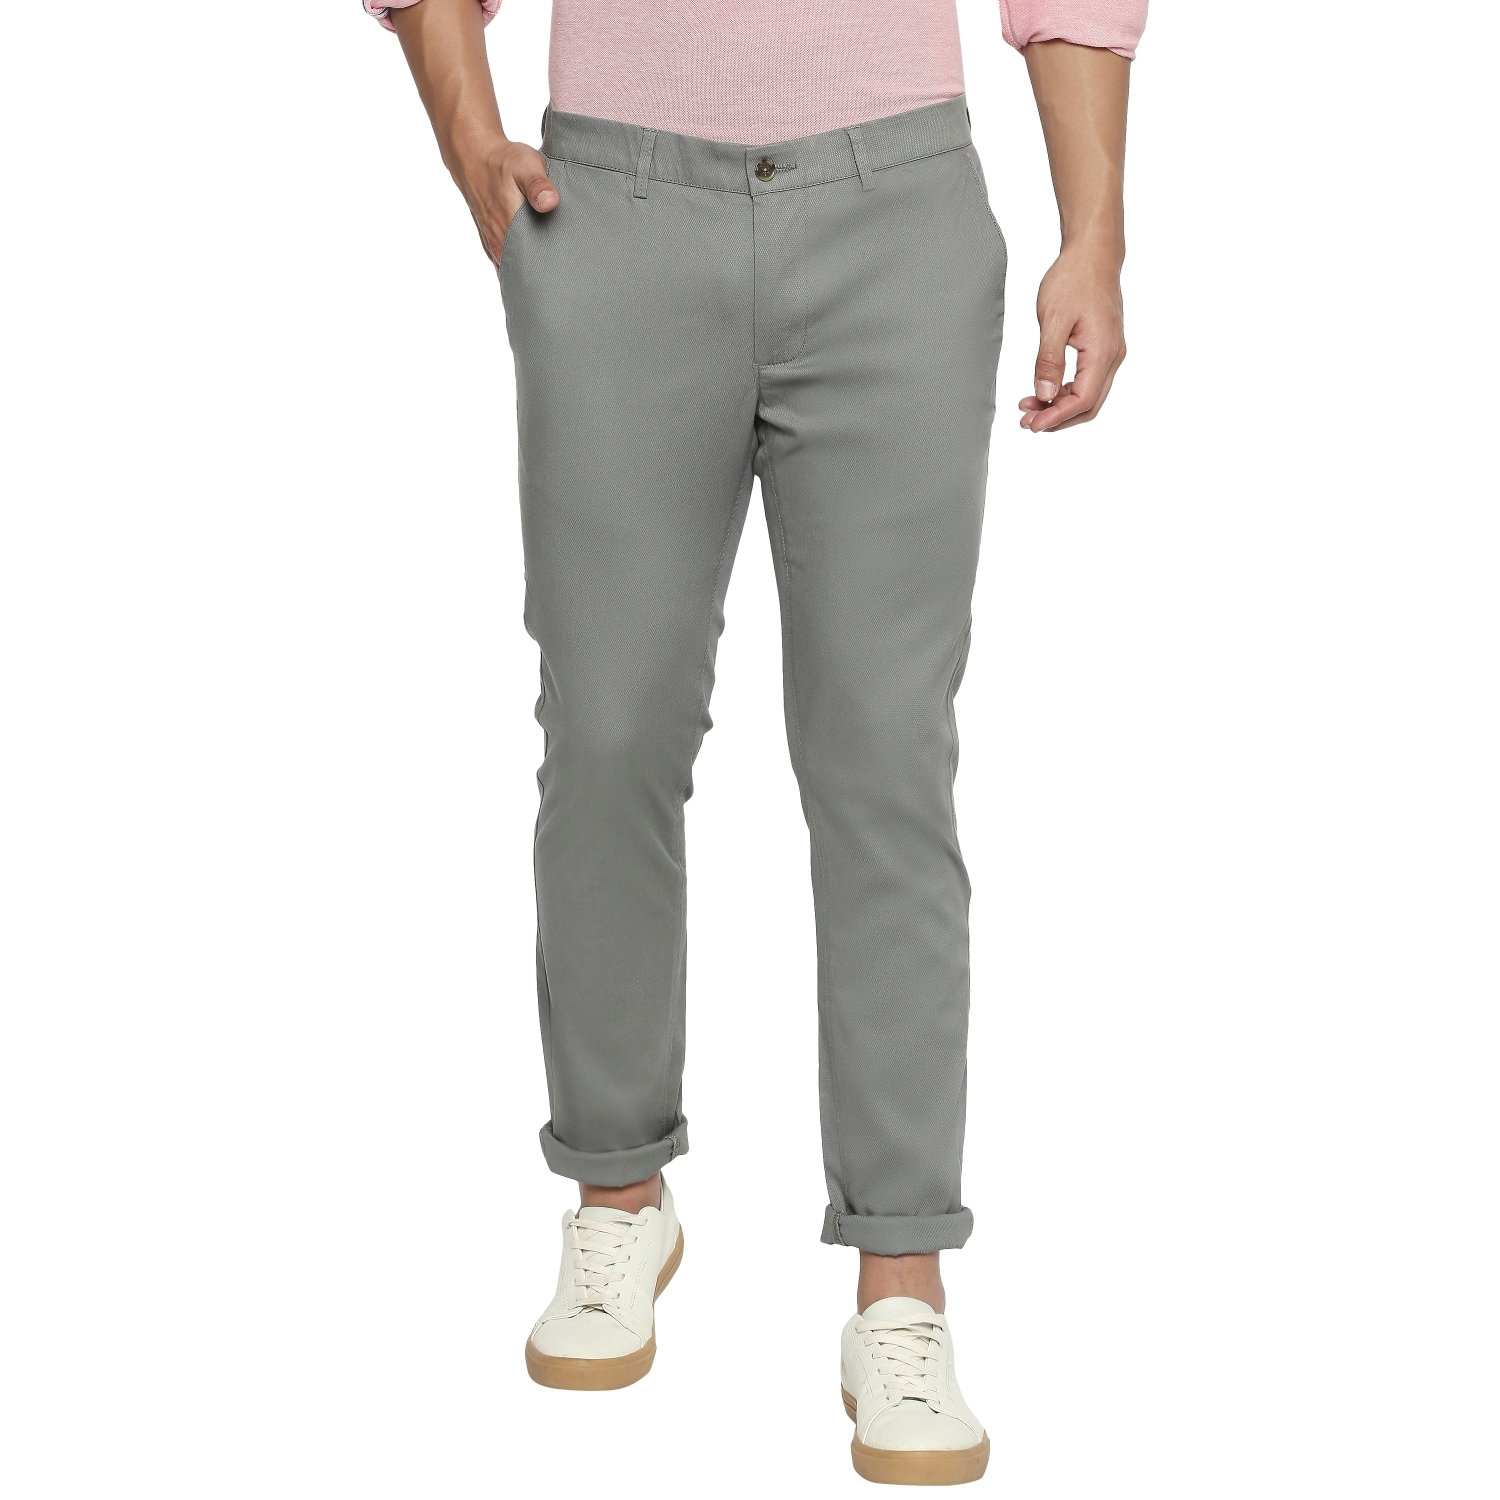 Basics | Basics Tapered Fit Laurel Green Stretch Trouser